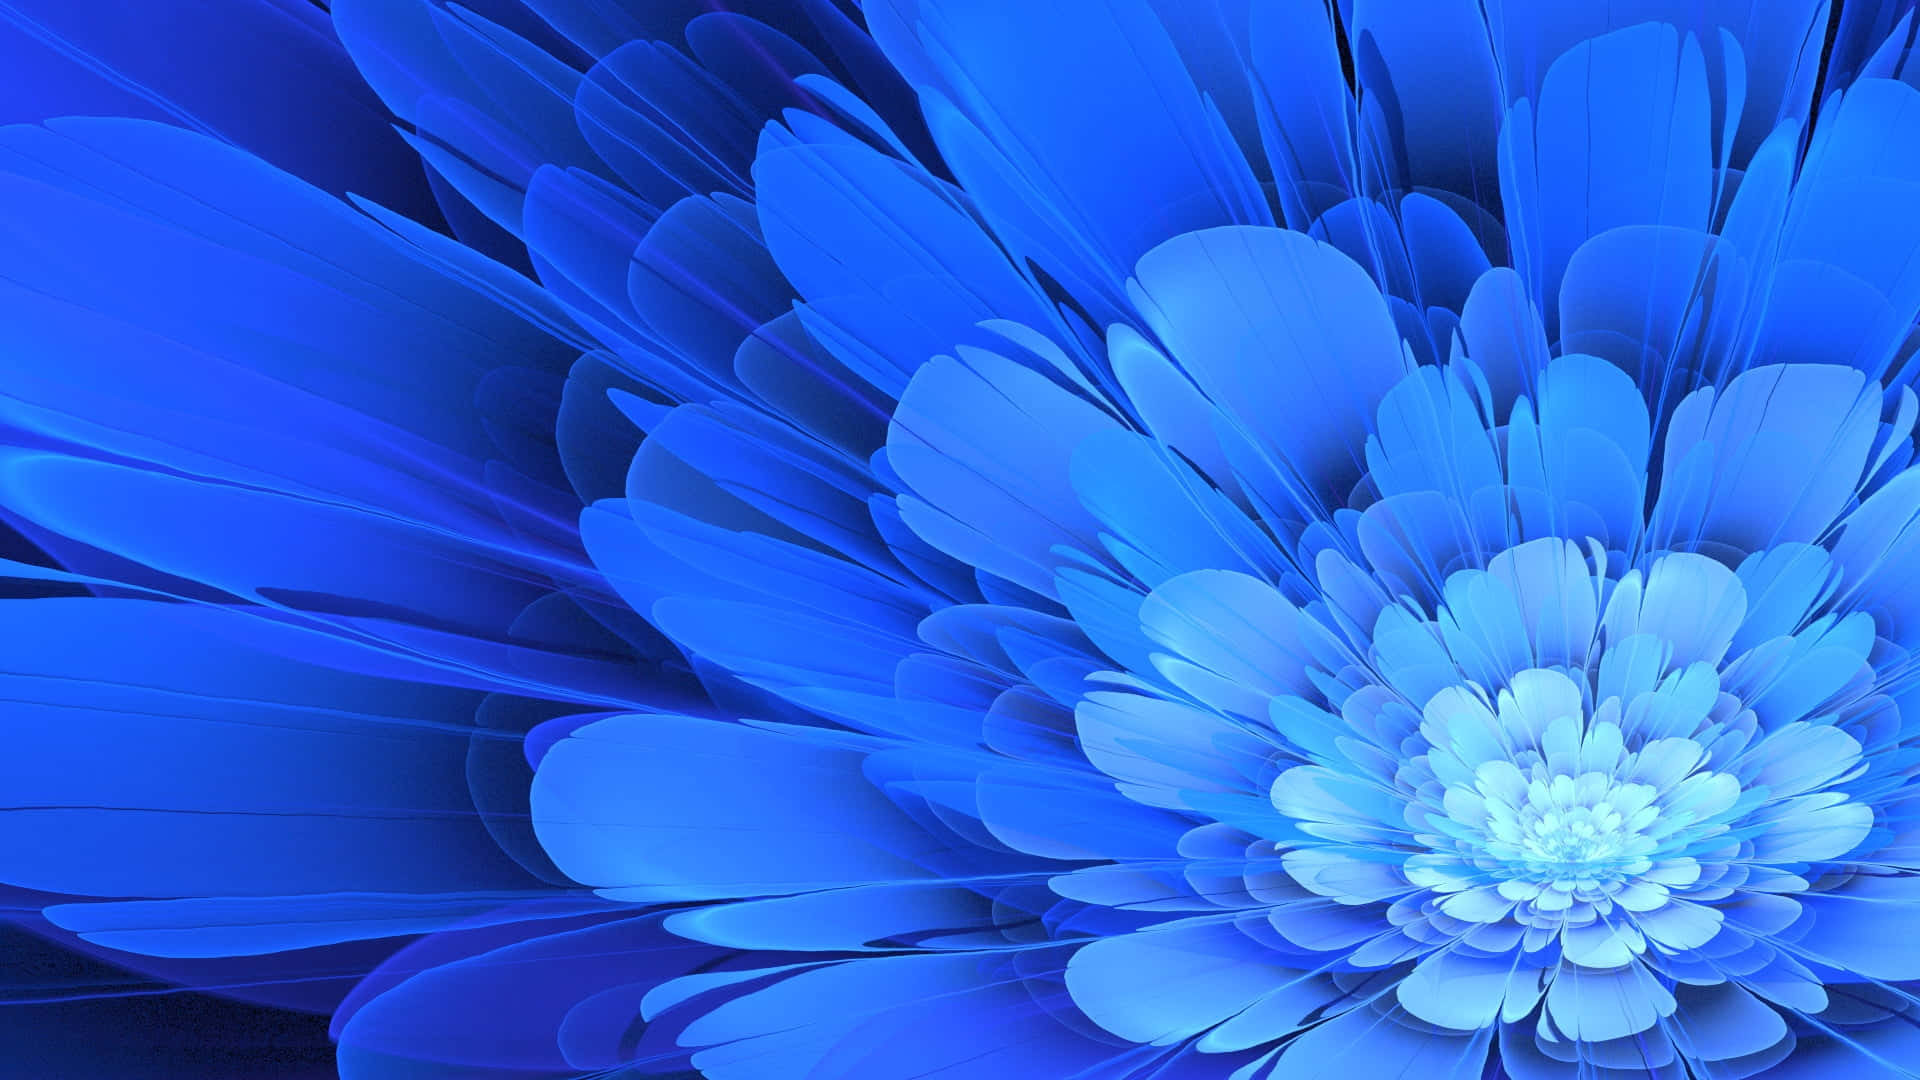 A Single Blue Flower on a Lush Green Desktop Wallpaper